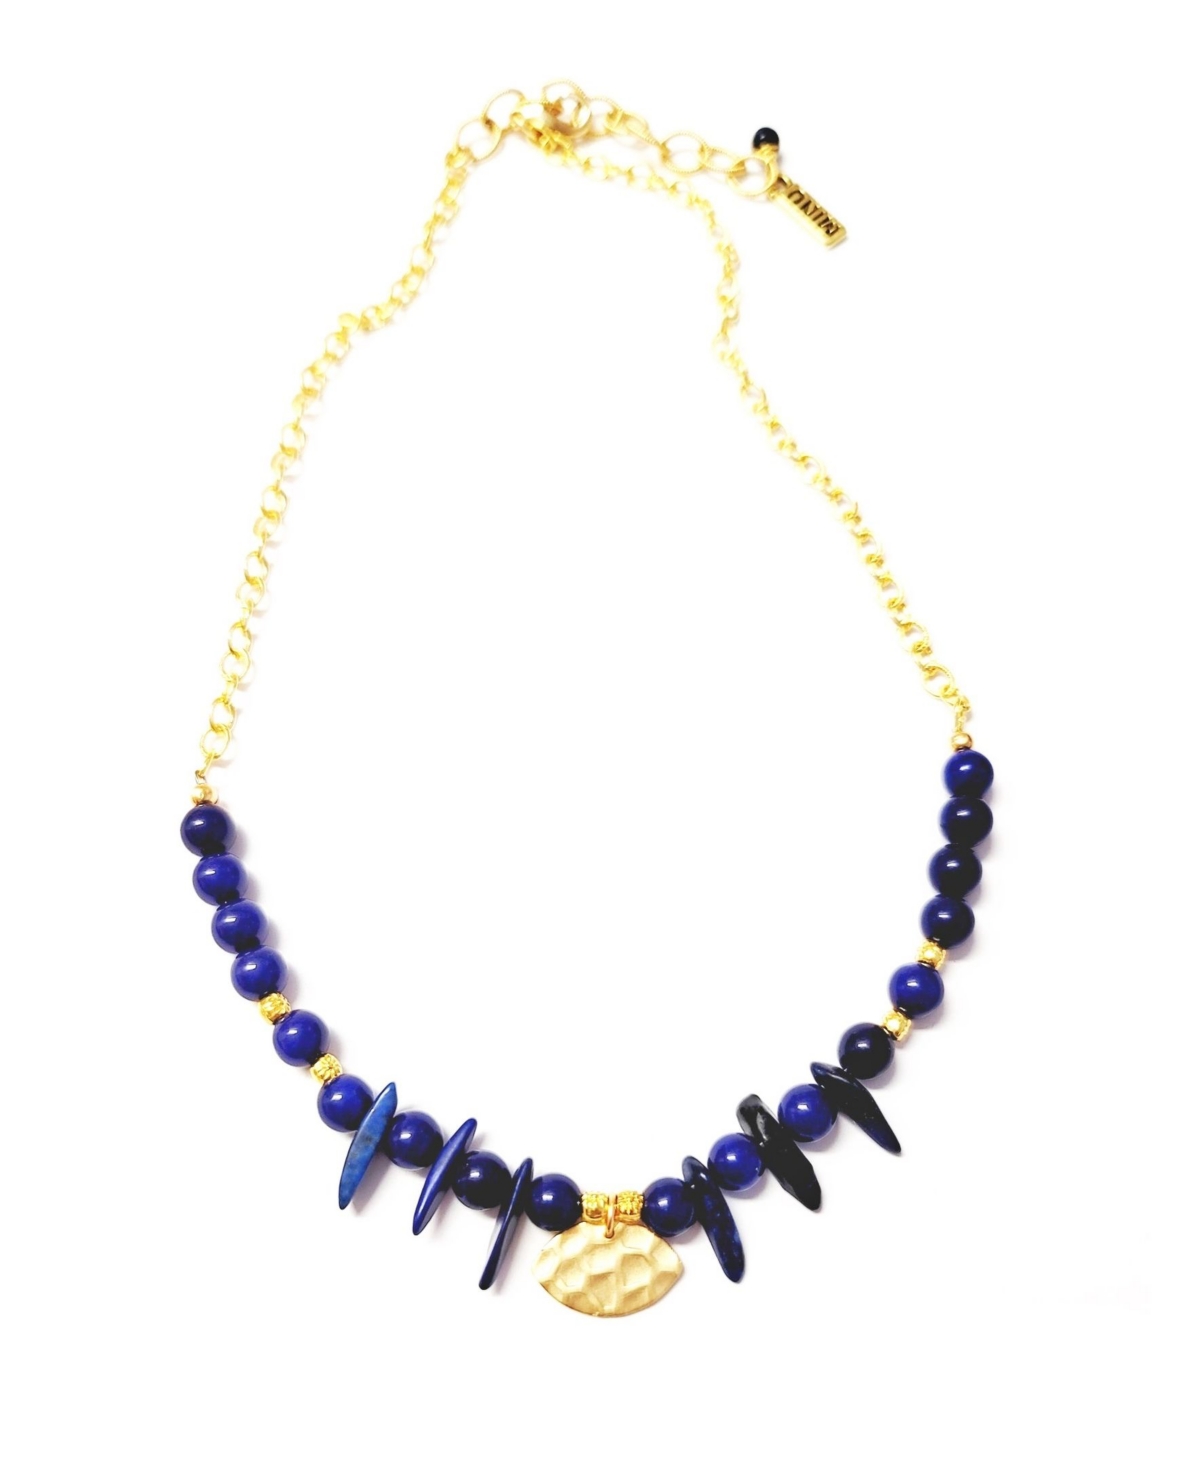 Women's Ain Necklace with Blue Lapis Stones - Gold-tone